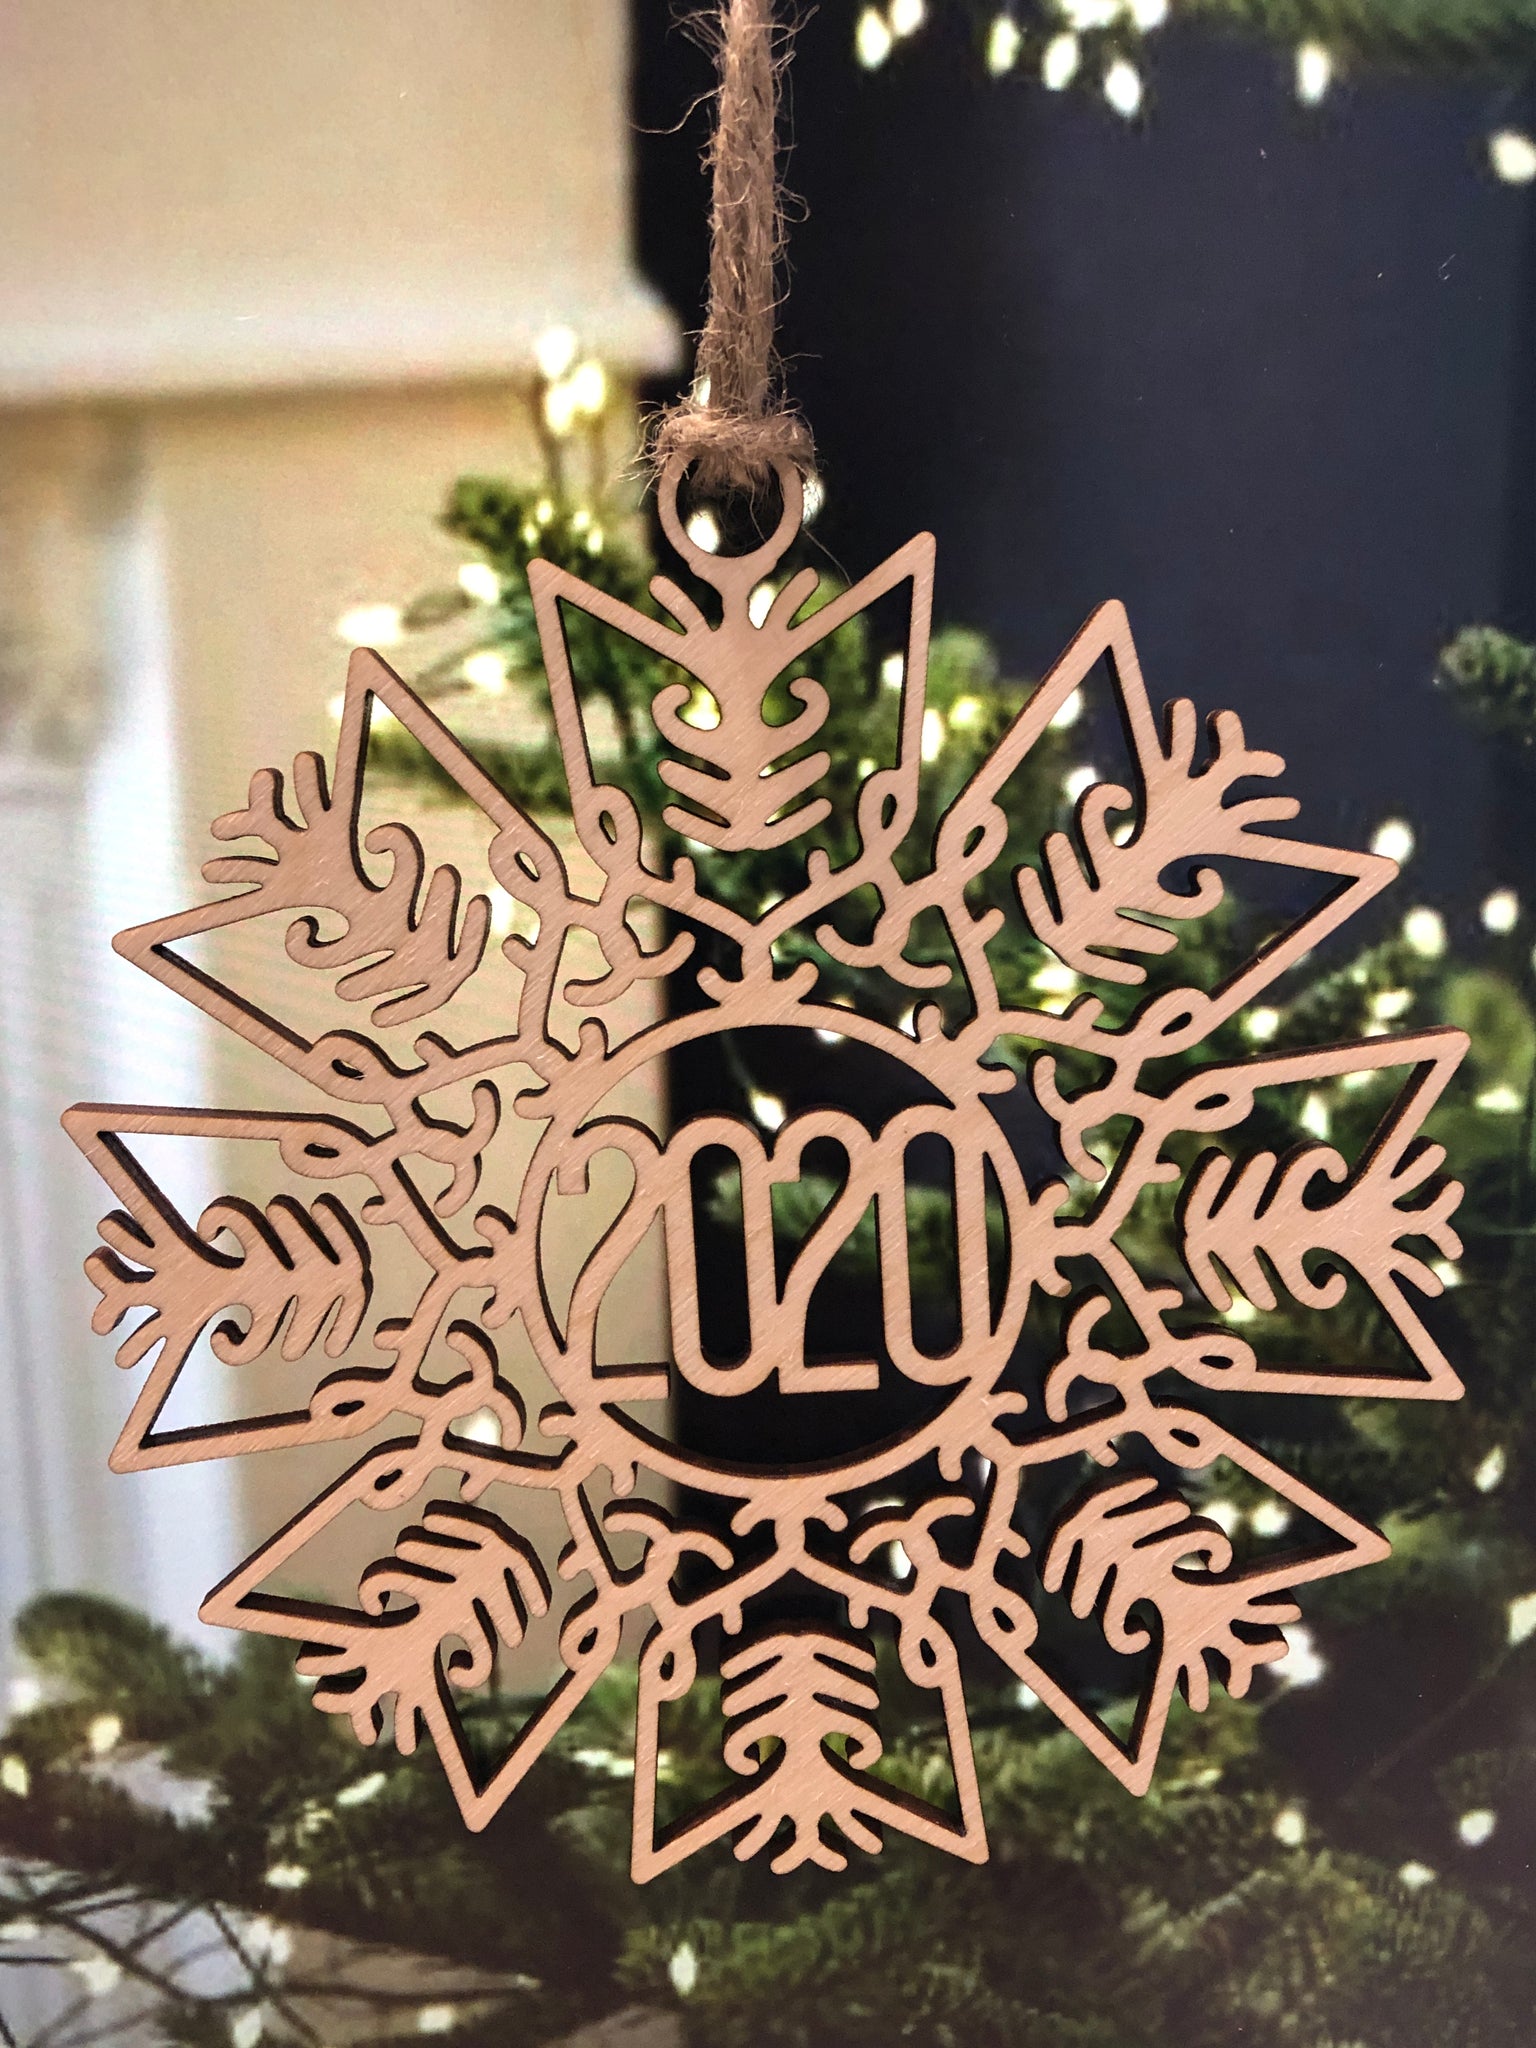 Commemorative 2020 Christmas Fuck Snowflake Ornament